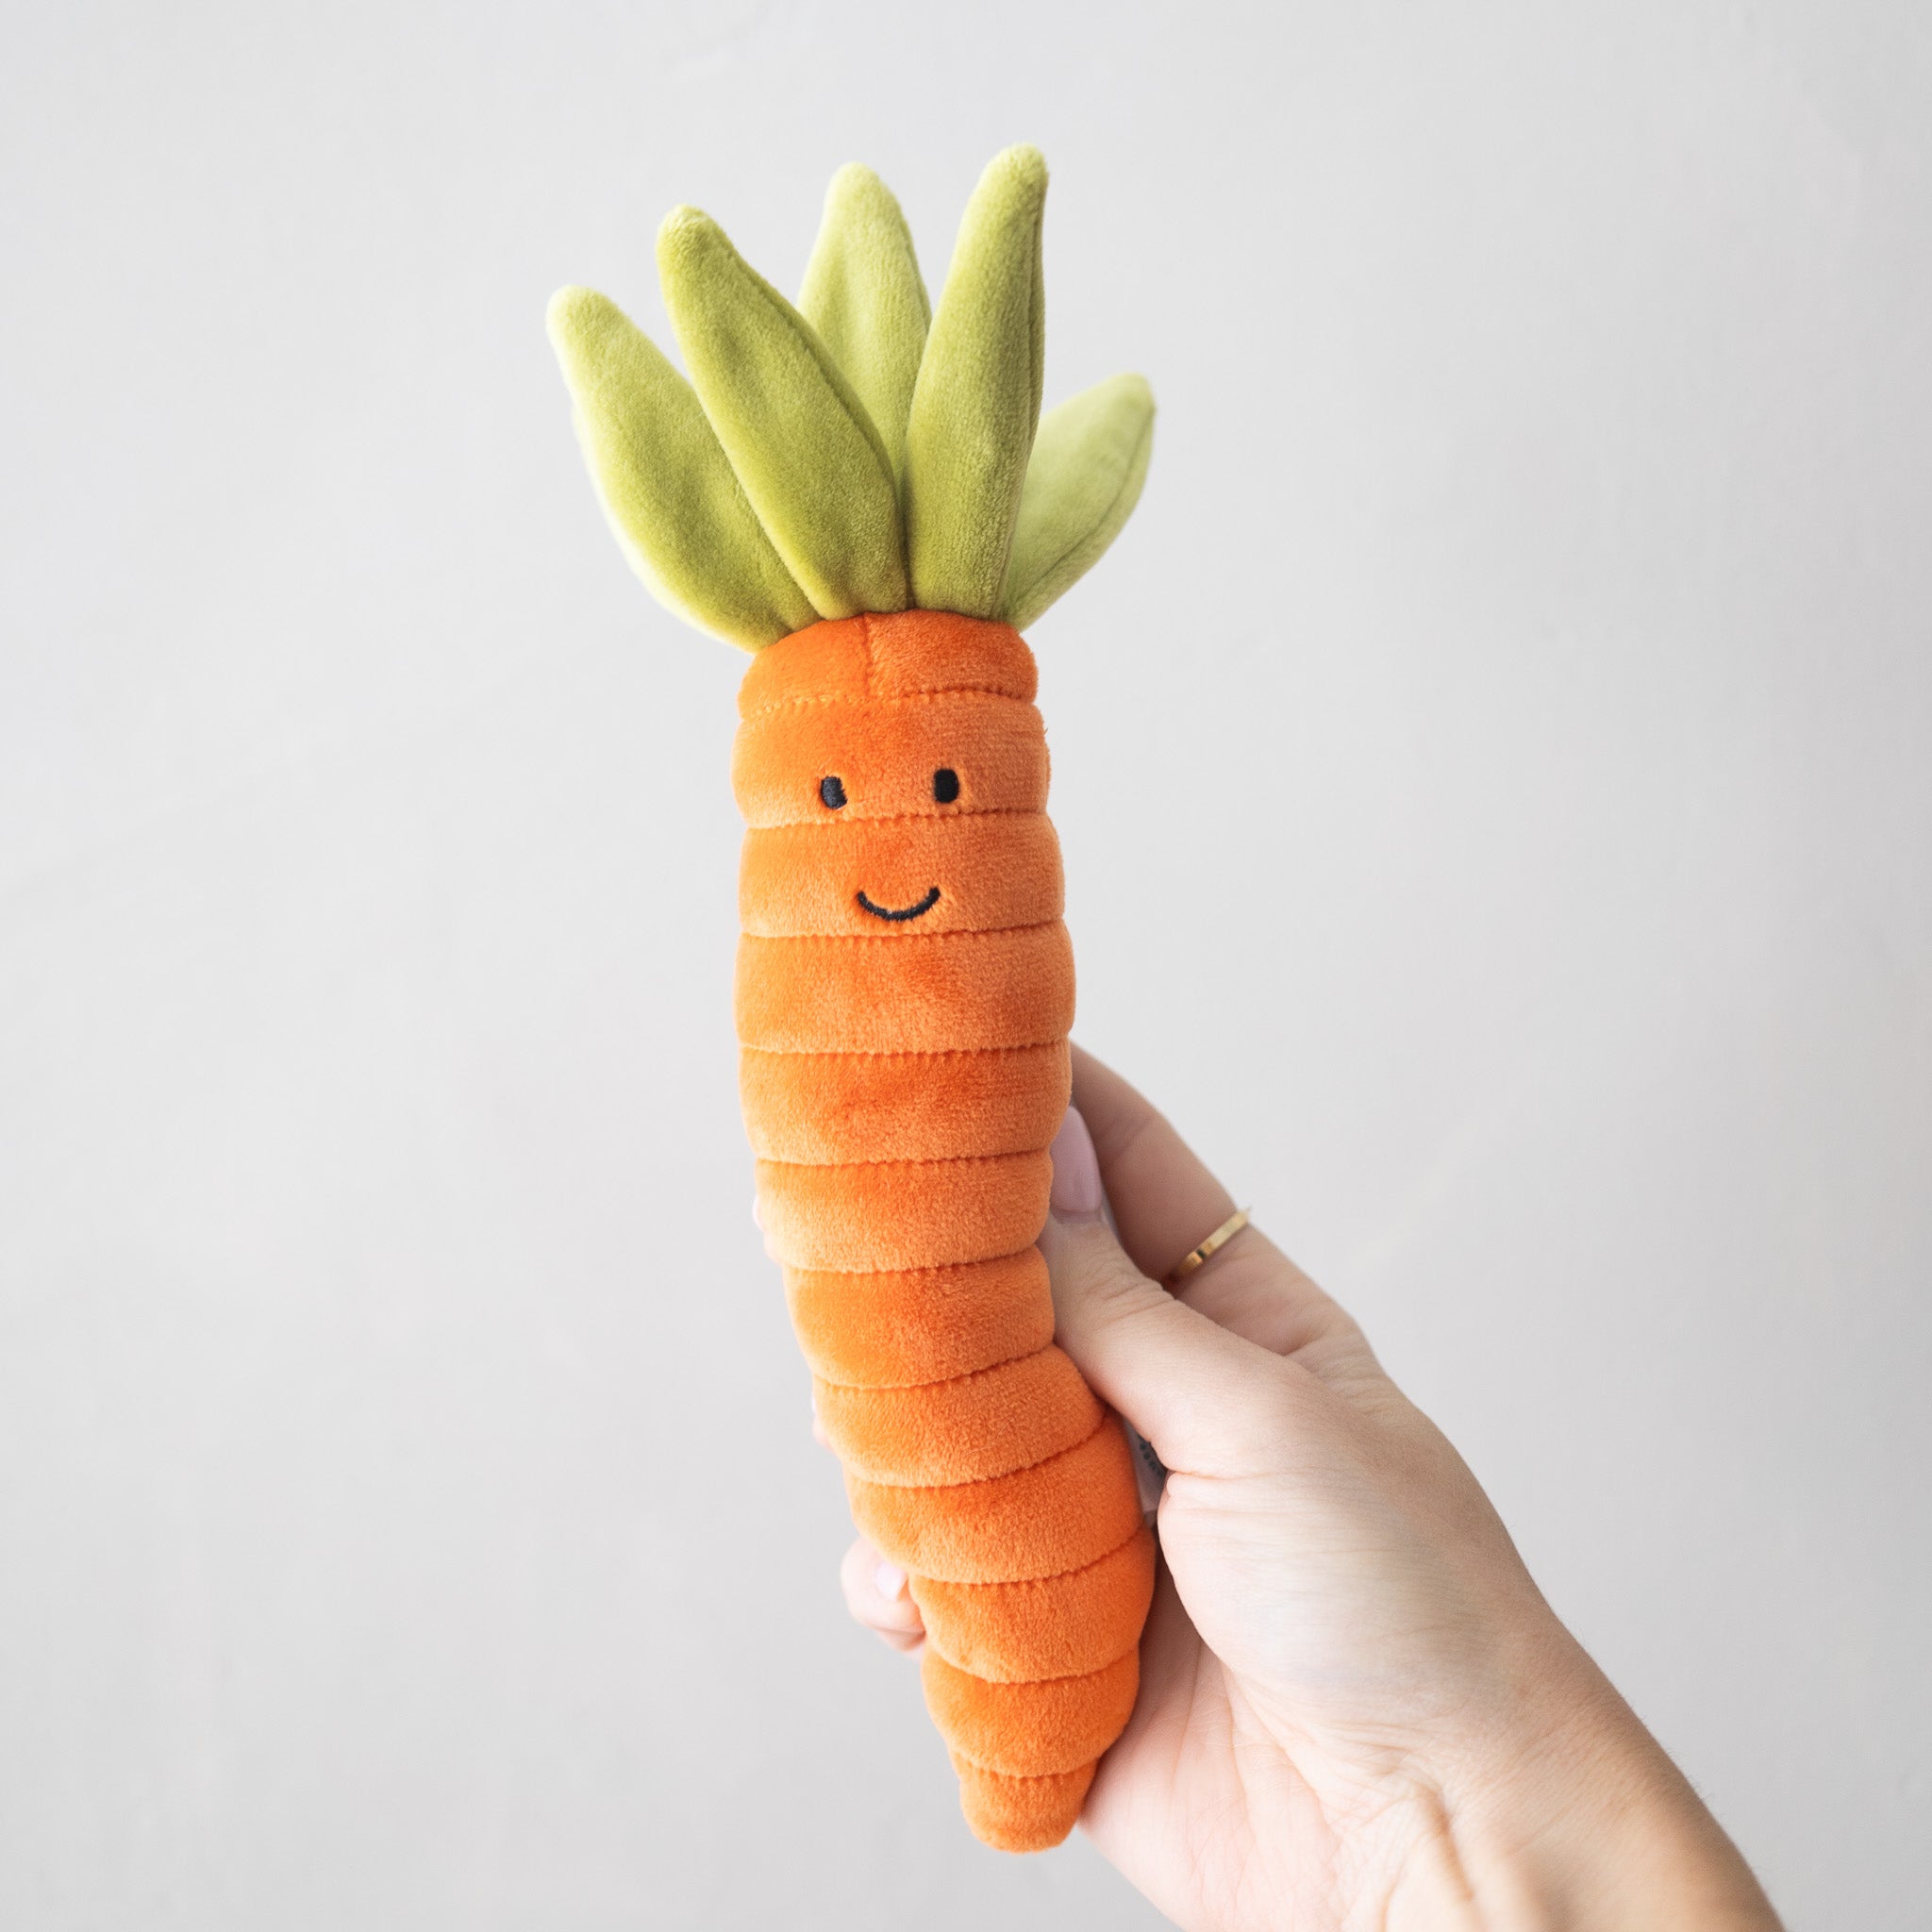 Vivacious Vegetable Carrot